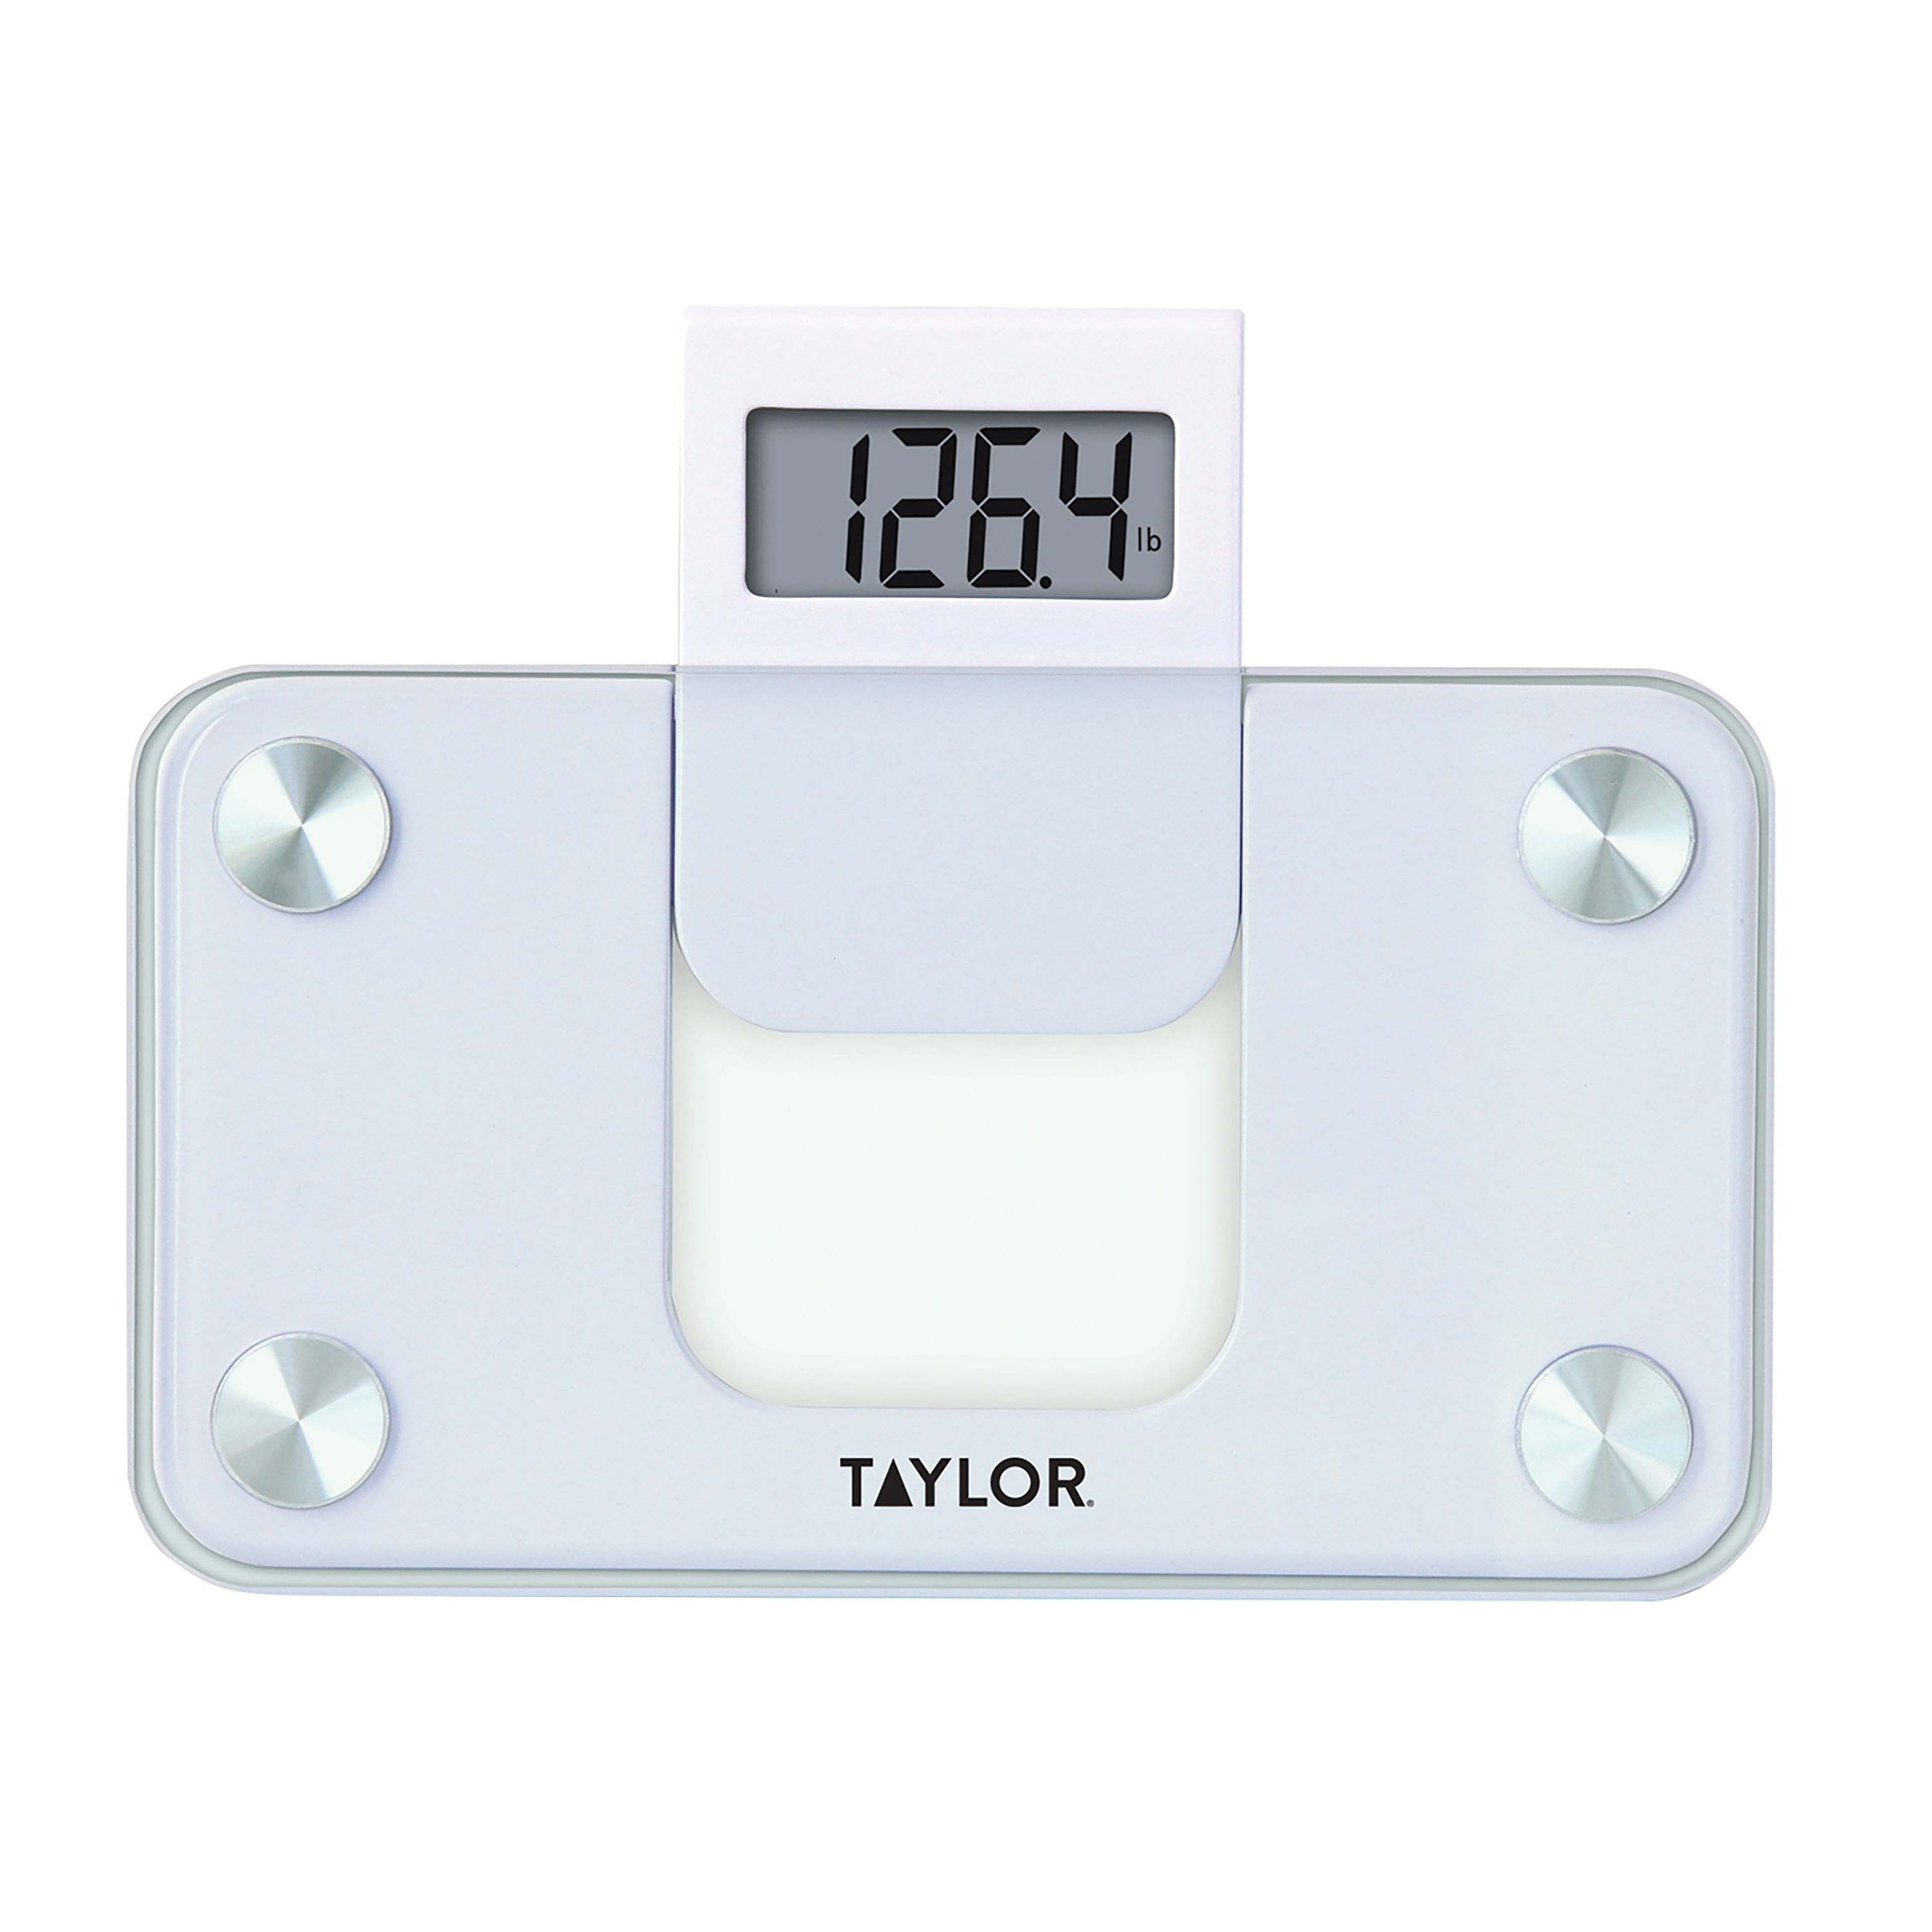 Taylor Digital White Mini Scale with Expandable Readout - Walmart.com